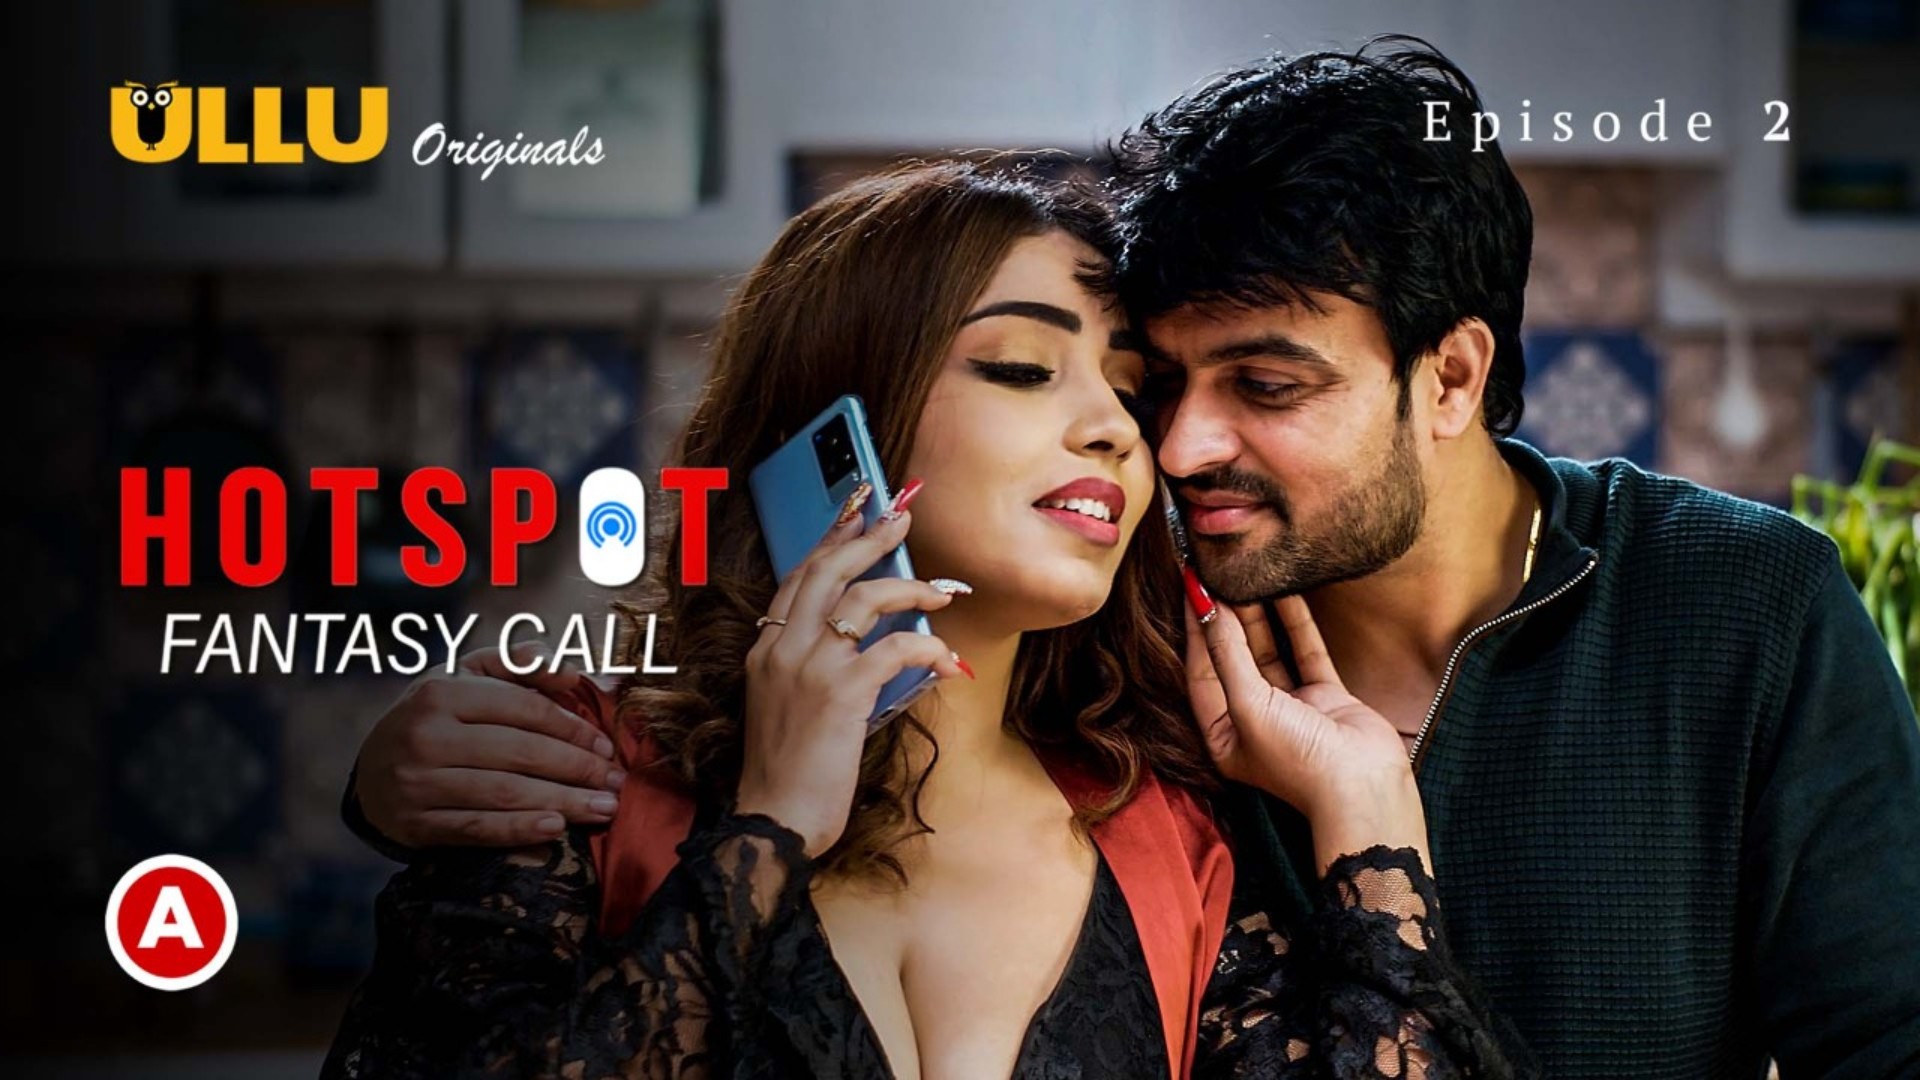 HotspotFantasy Call S01E02 2021 Hindi Hot Web Series Ullu Indian